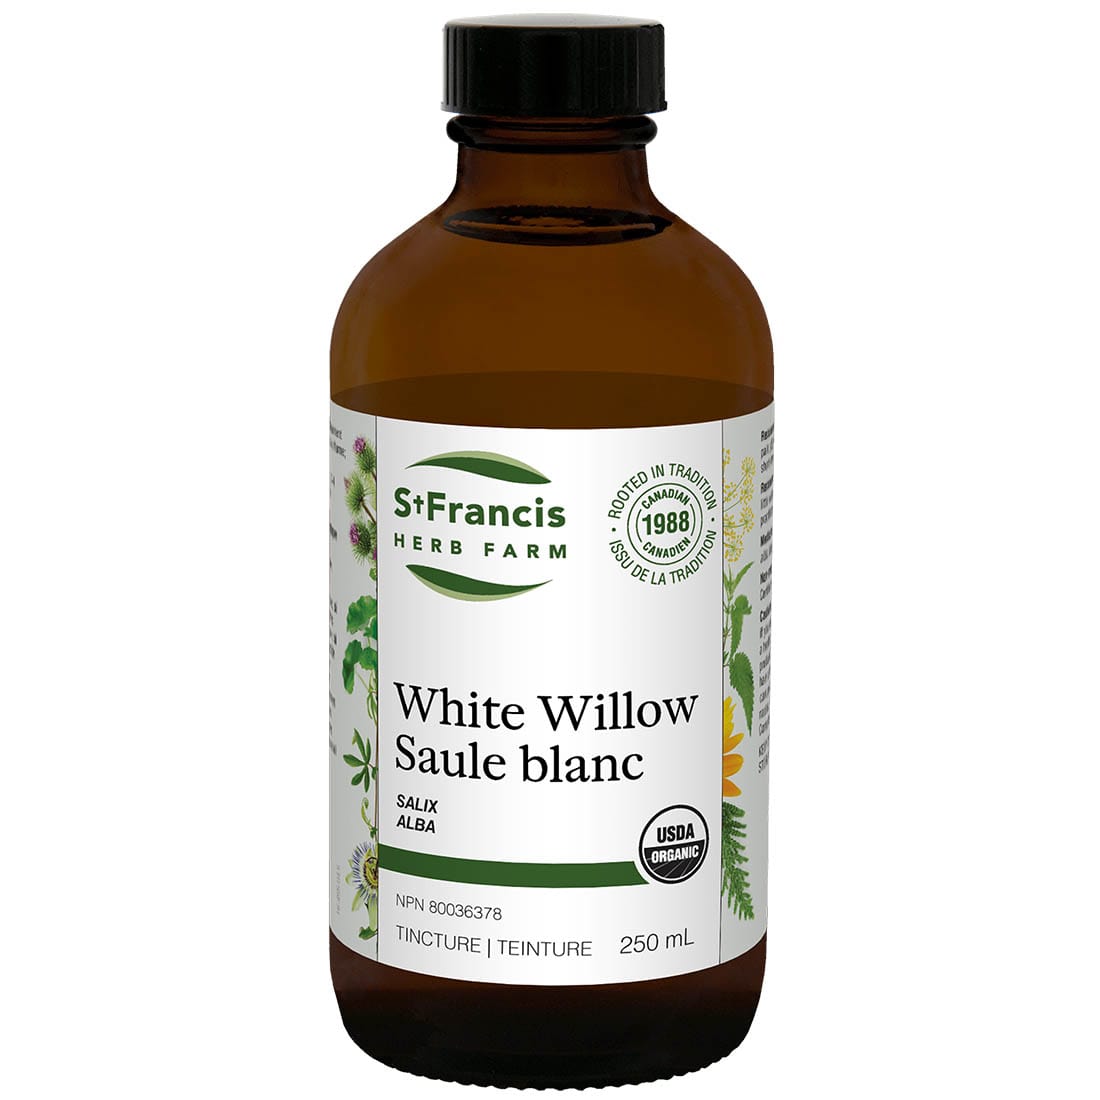 St. Francis White Willow Liquid Tincture